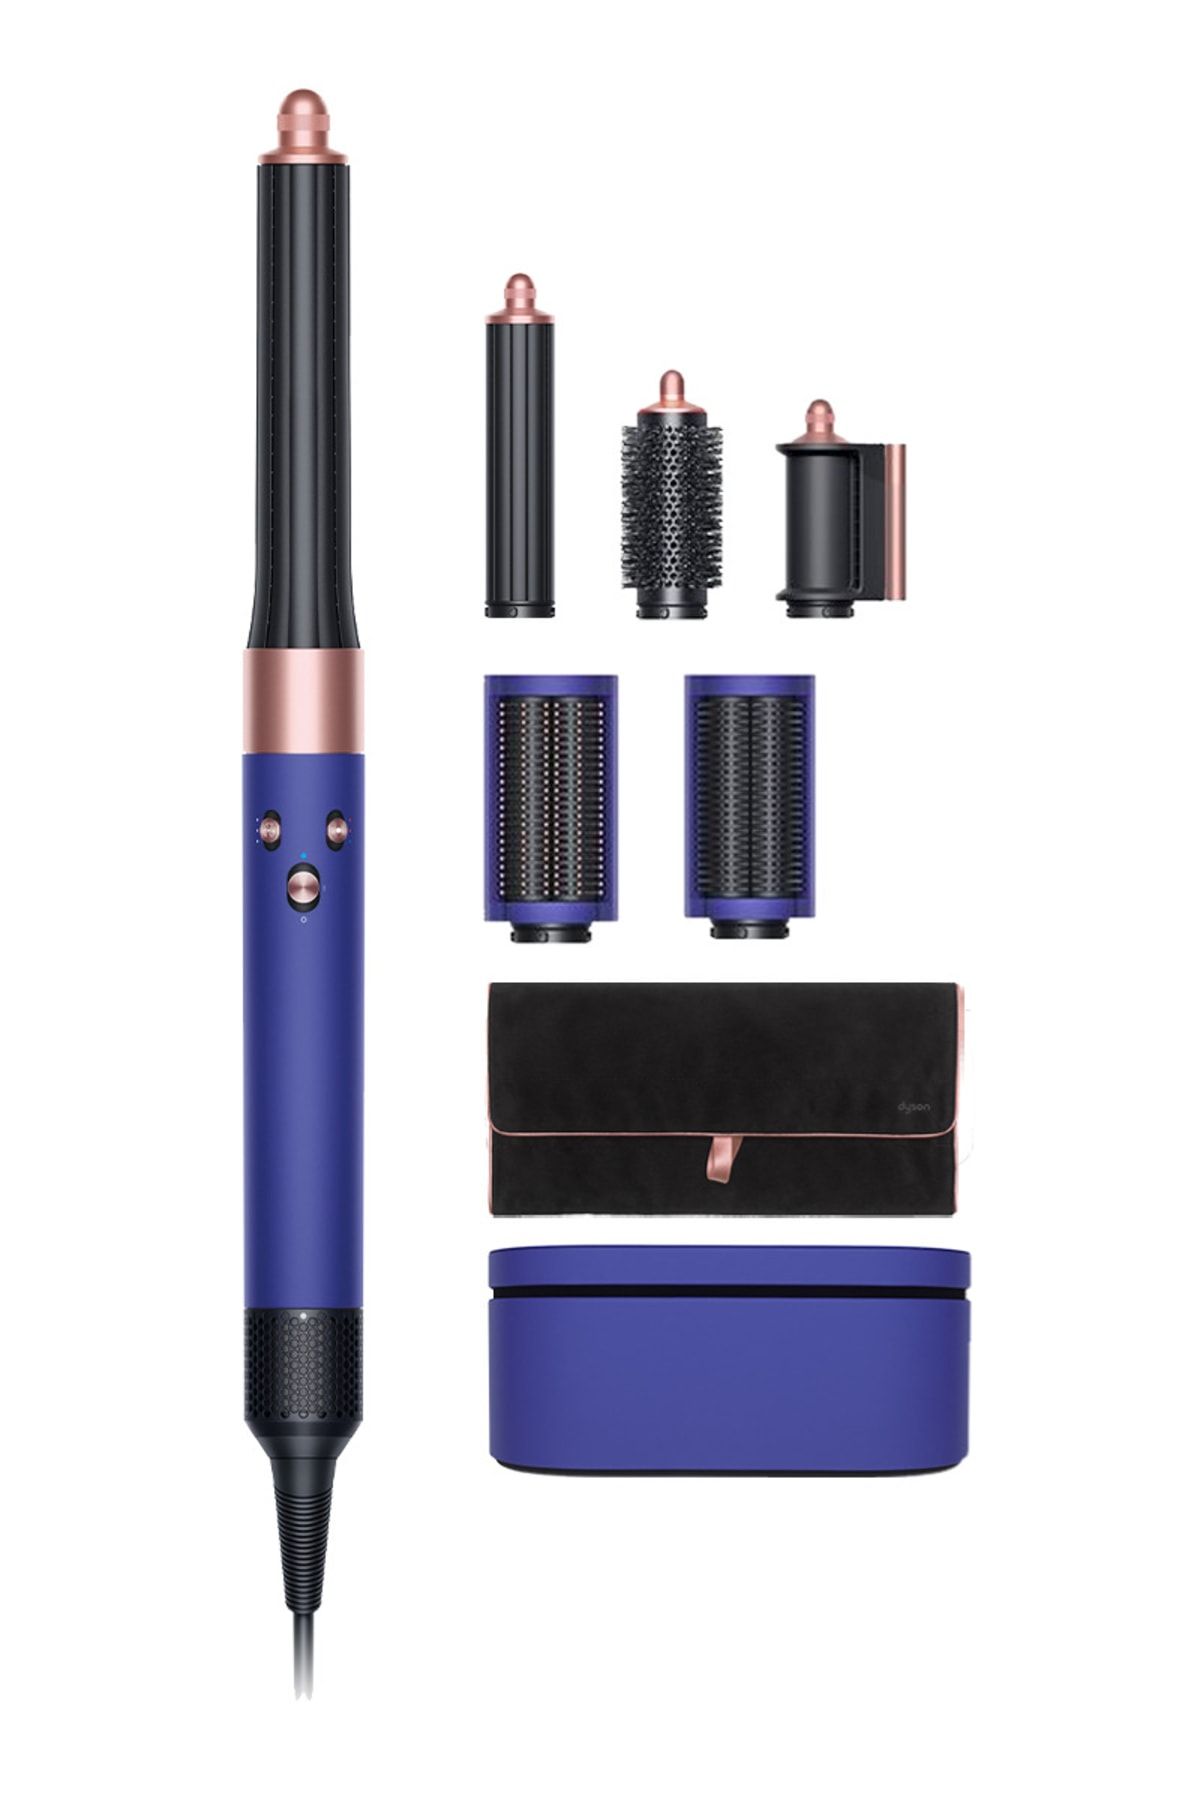 Airwrap™ Multi-Styler Complete Uzun Saç Şekillendirici (Vinca mavisi/Rosé)